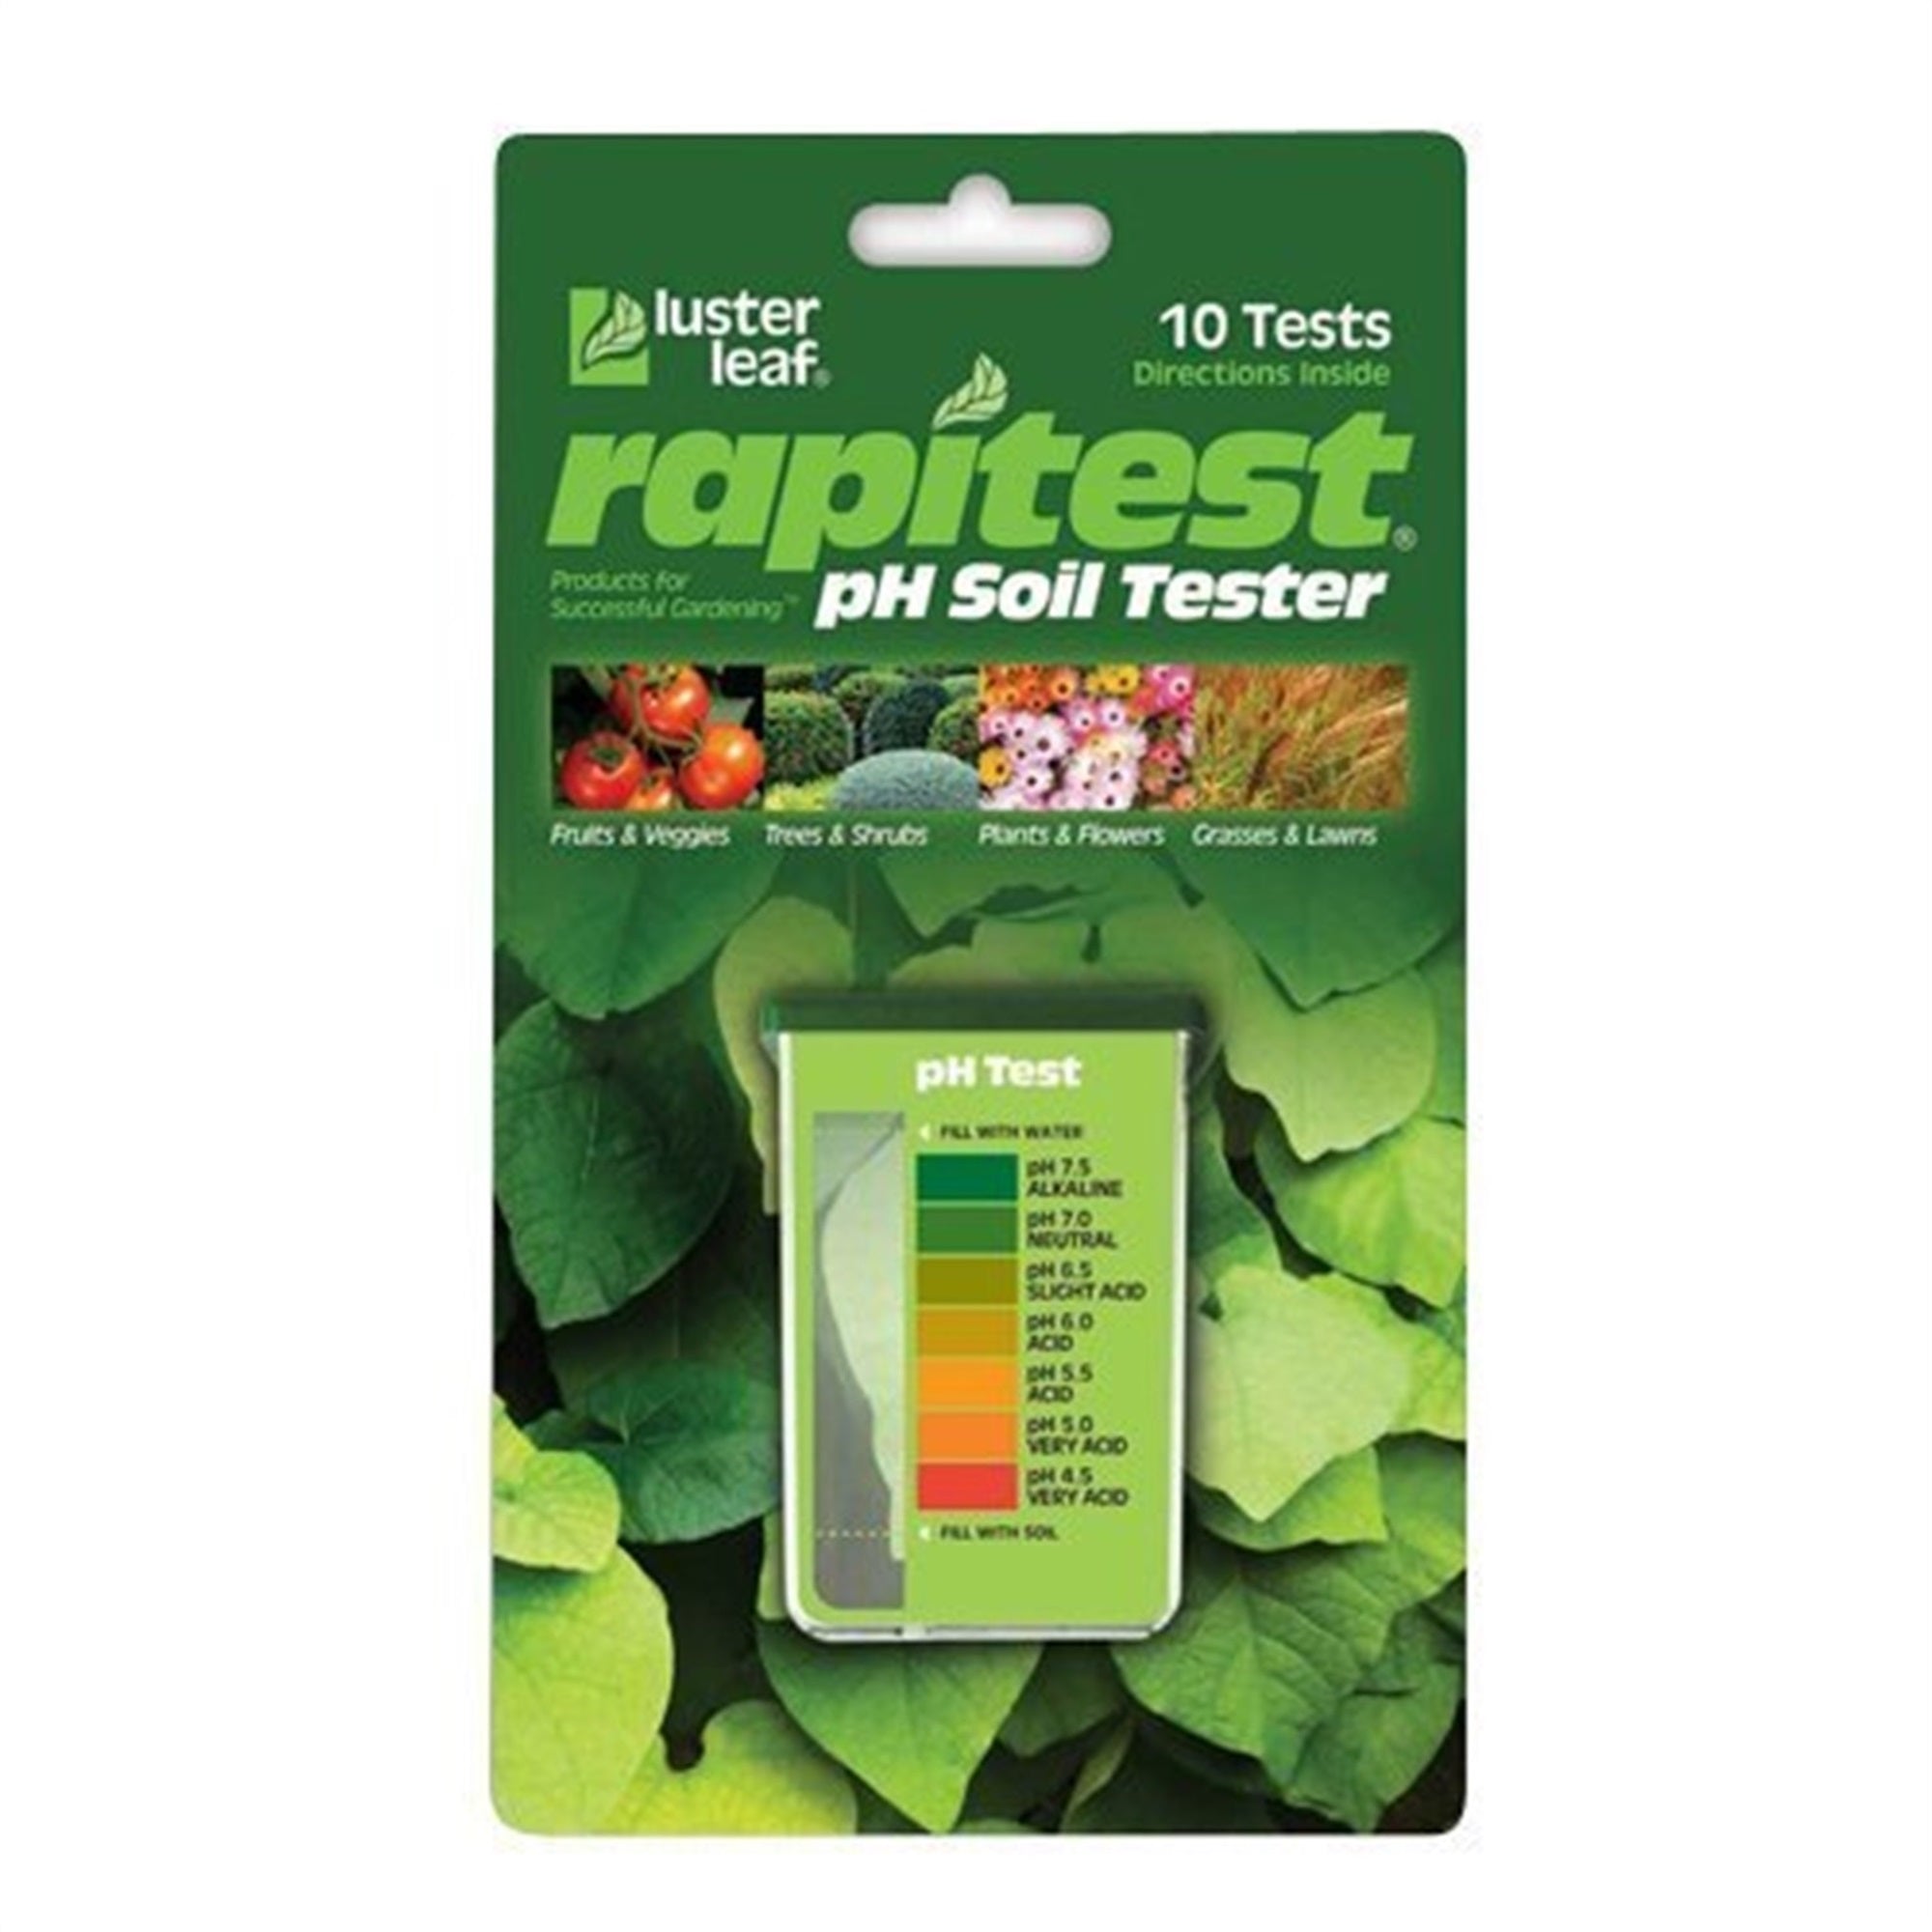 Luster Leaf Rapitest pH Soil Tester - Contains 10 pH Tests